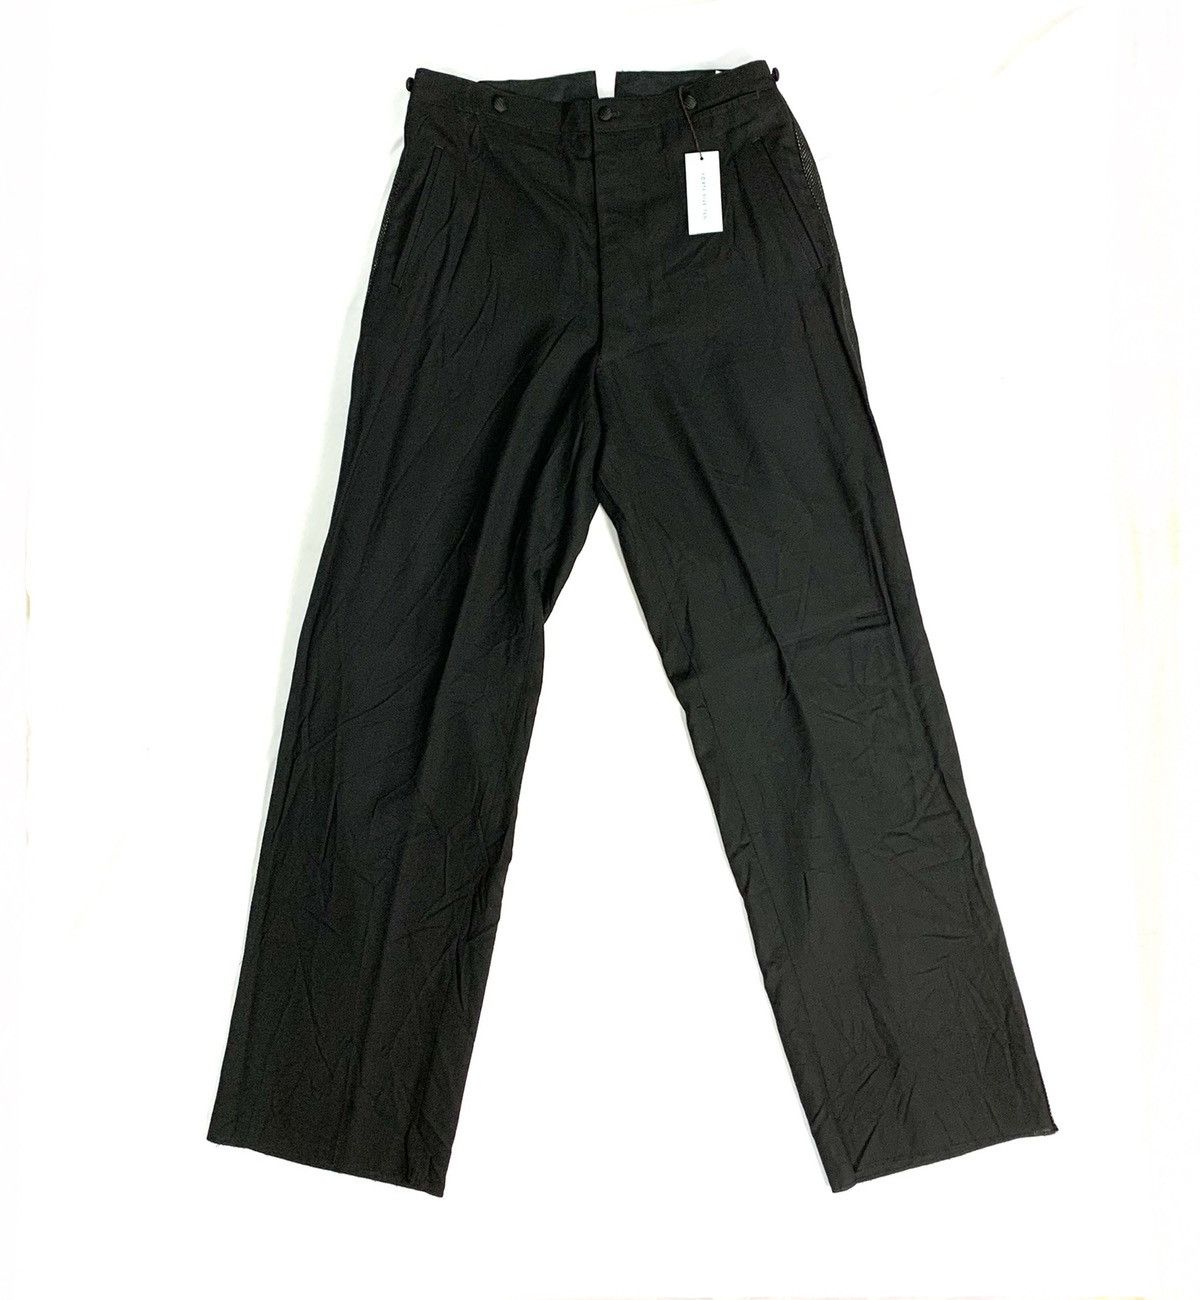 Yohji Yamamoto Yohji Yamamoto Pour Homme SS2003 Black Mesh Trim Pants ...